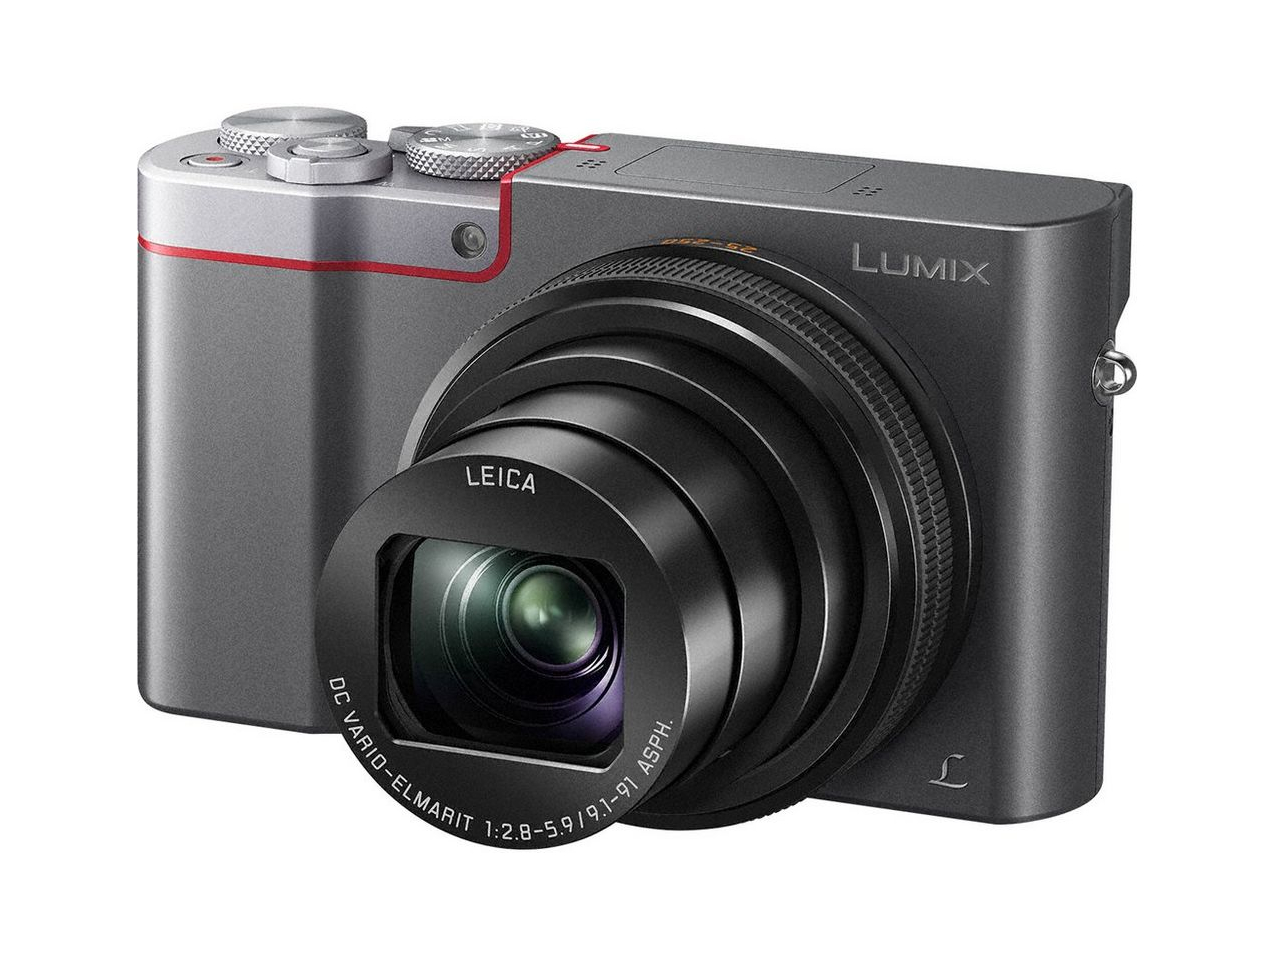 kleding Ontmoedigen Algebraïsch Panasonic DMC-ZS100 LUMIX 4K Digital Camera With 20MP Sensor, 25-250mm F/2.8-5.9  | Full Compass Systems